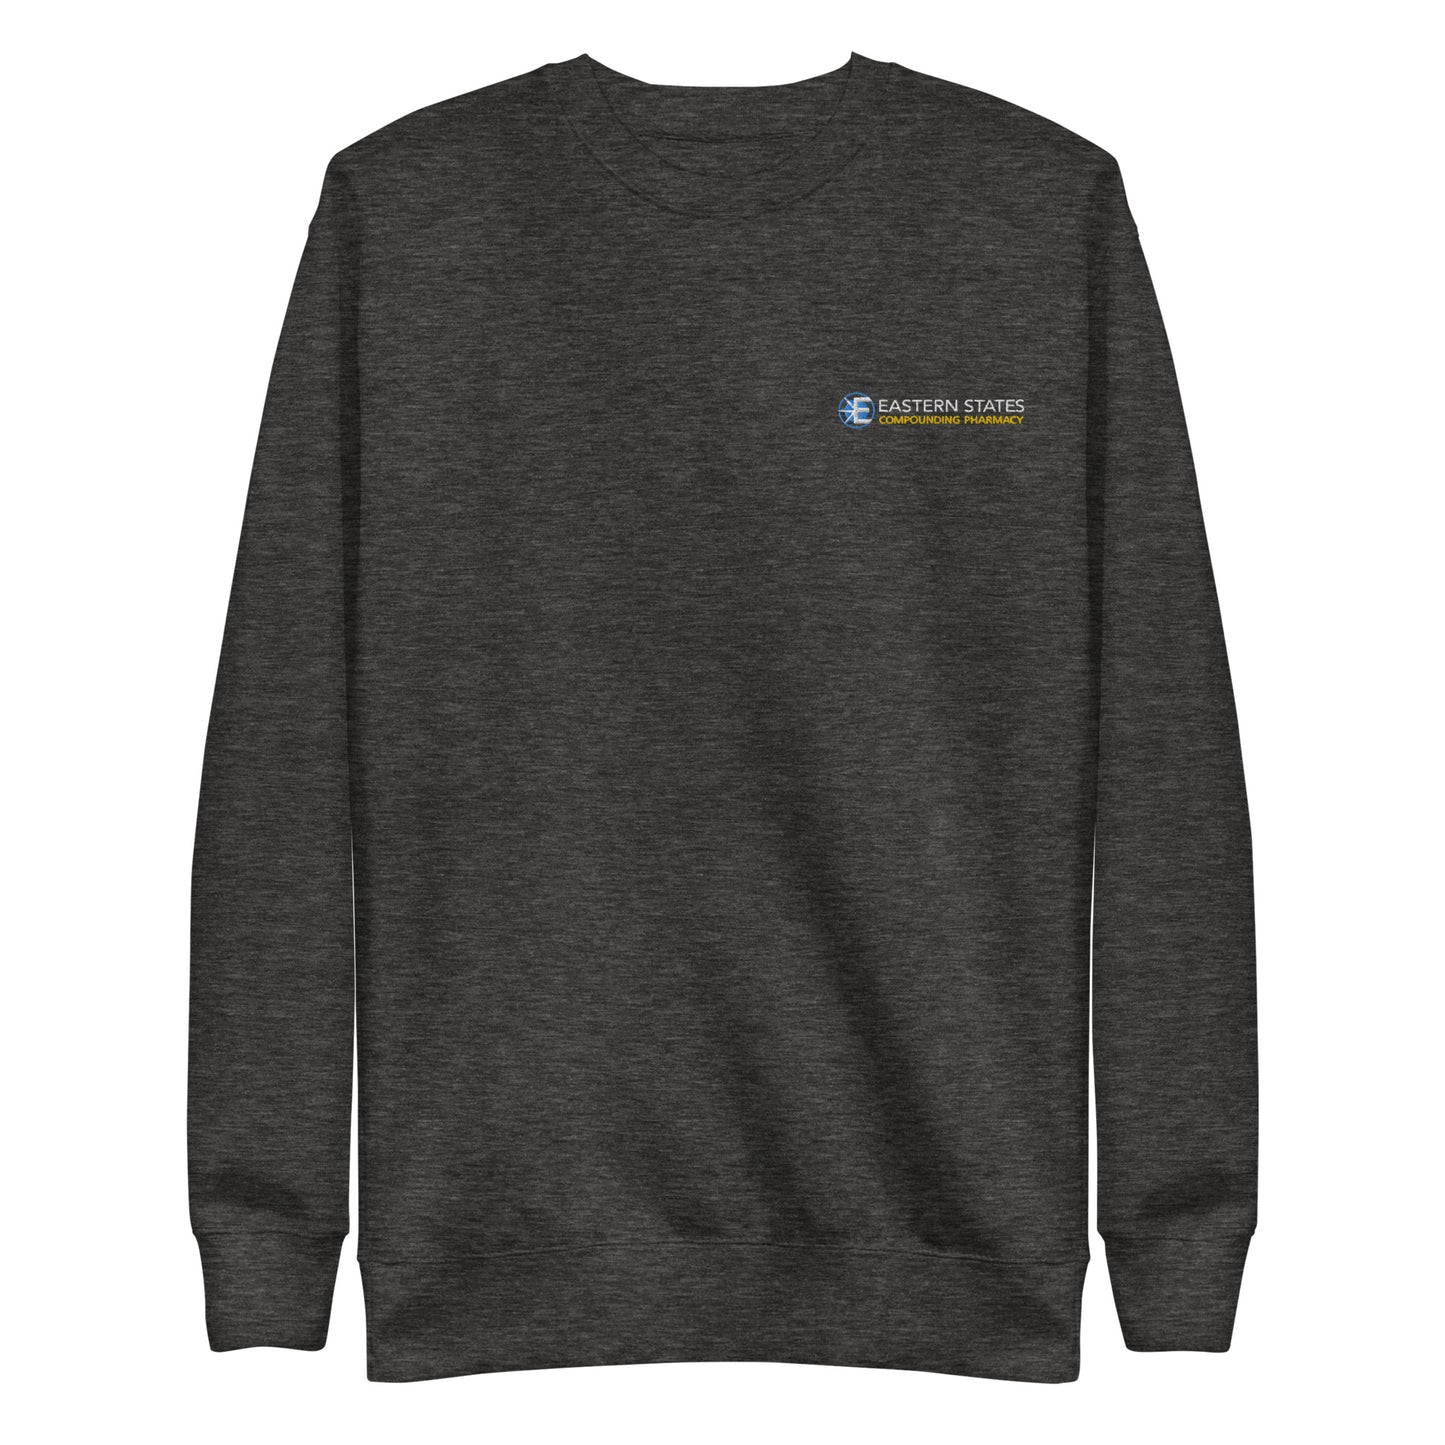 Unisex Premium Sweatshirt (fitted cut) - Eastern States